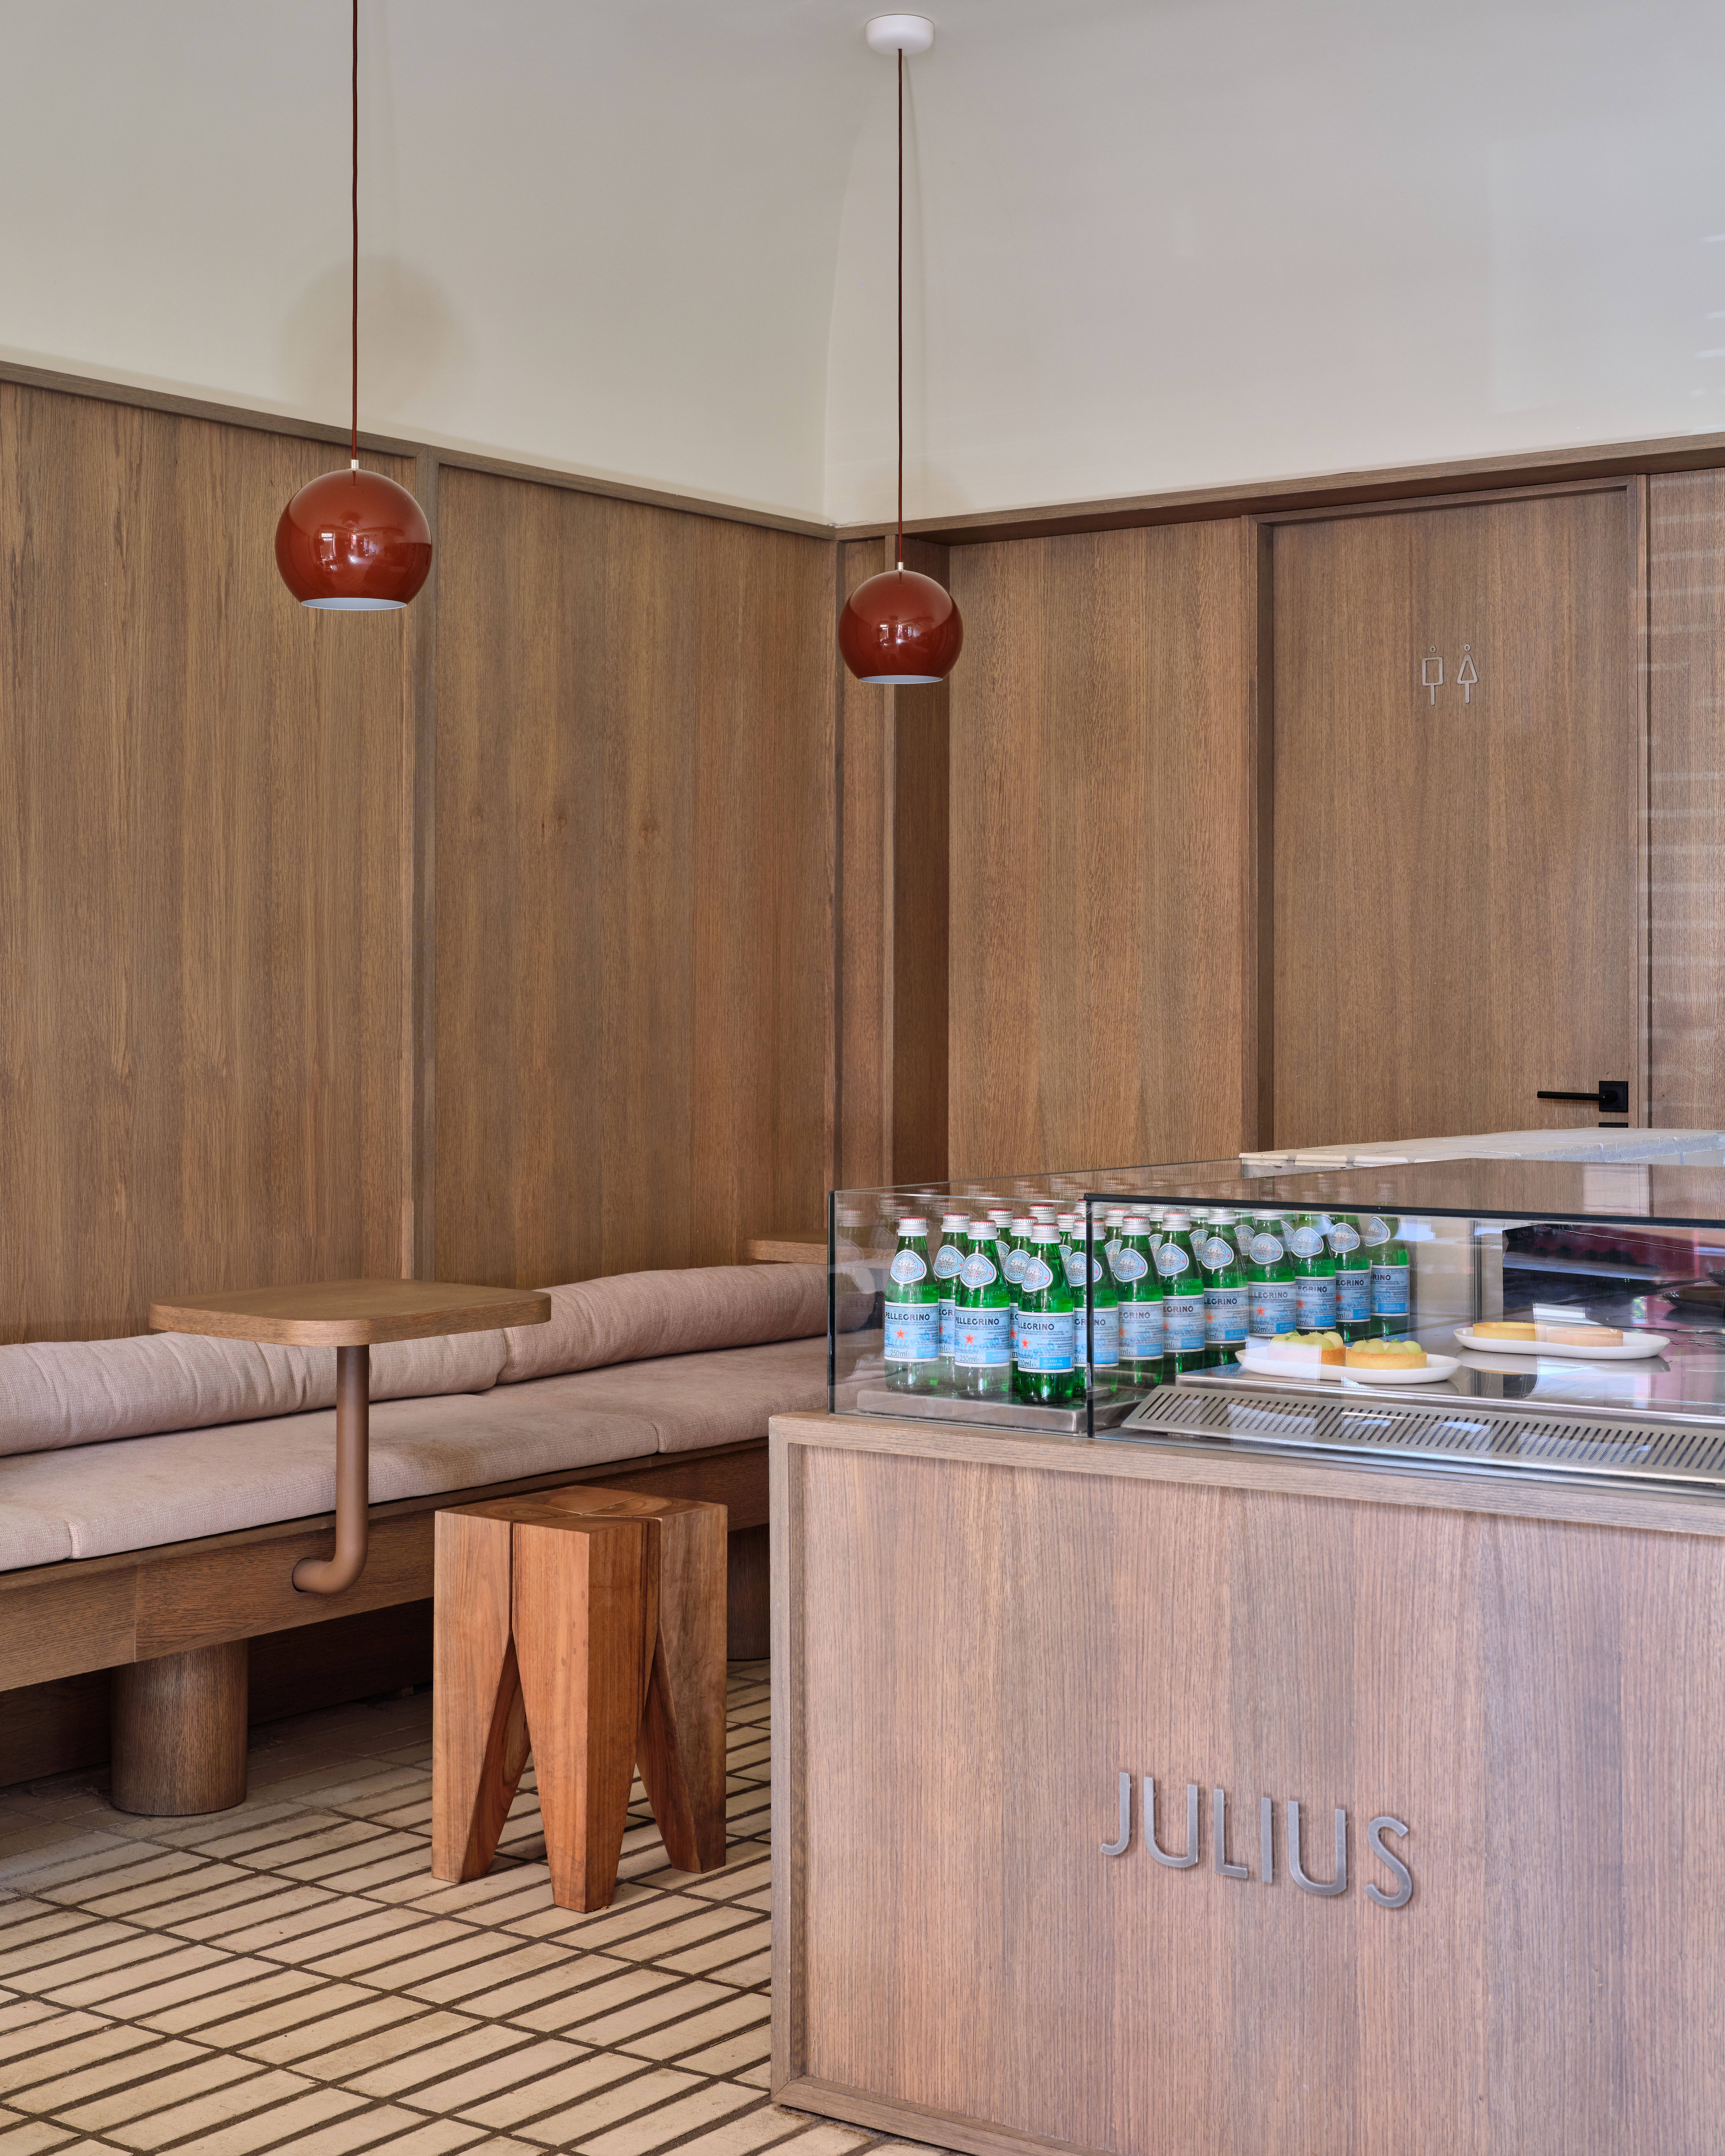 Julius Coffee Shop